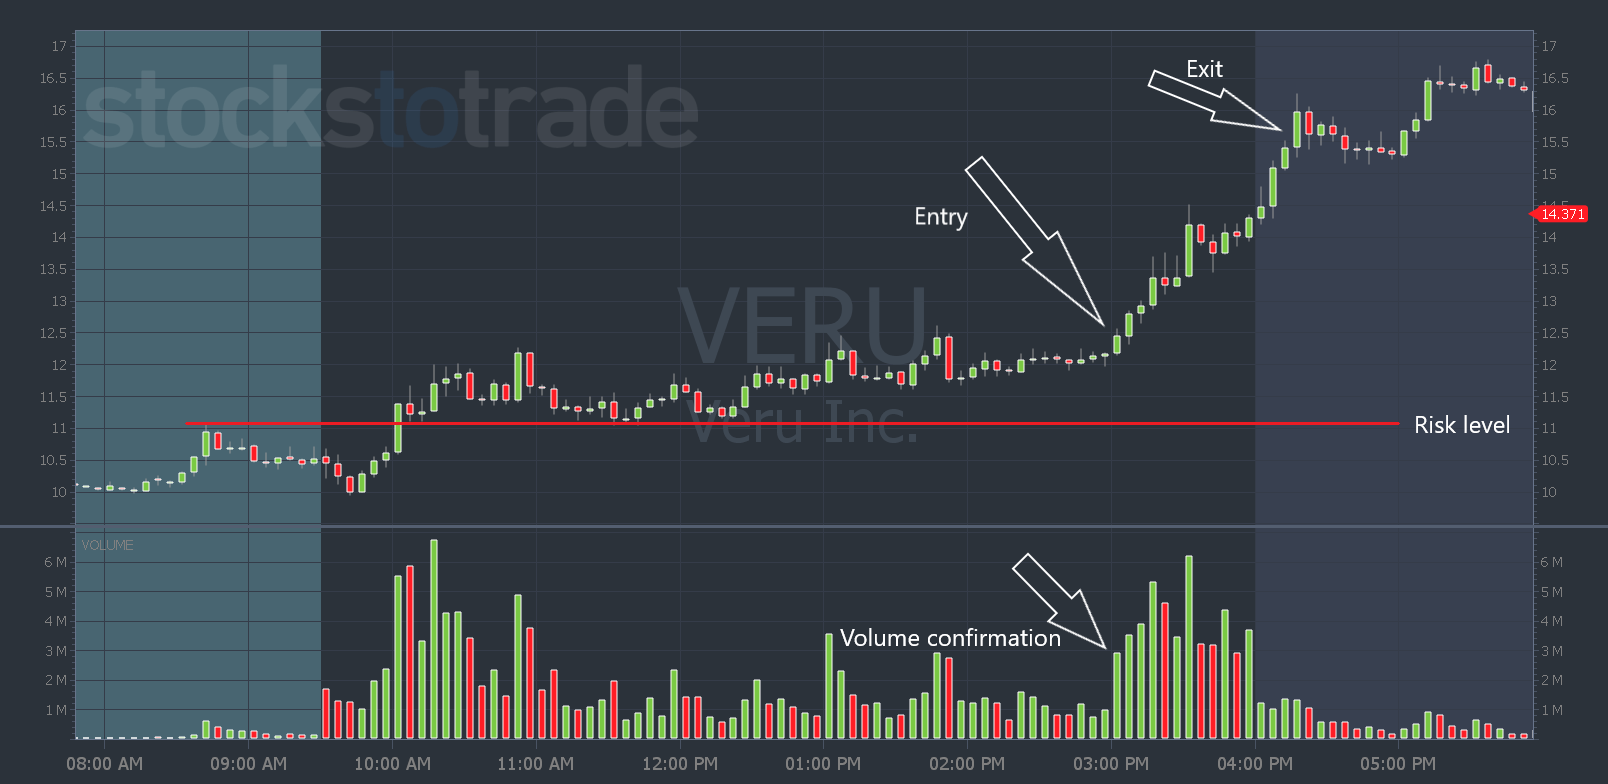 VERU stock chart